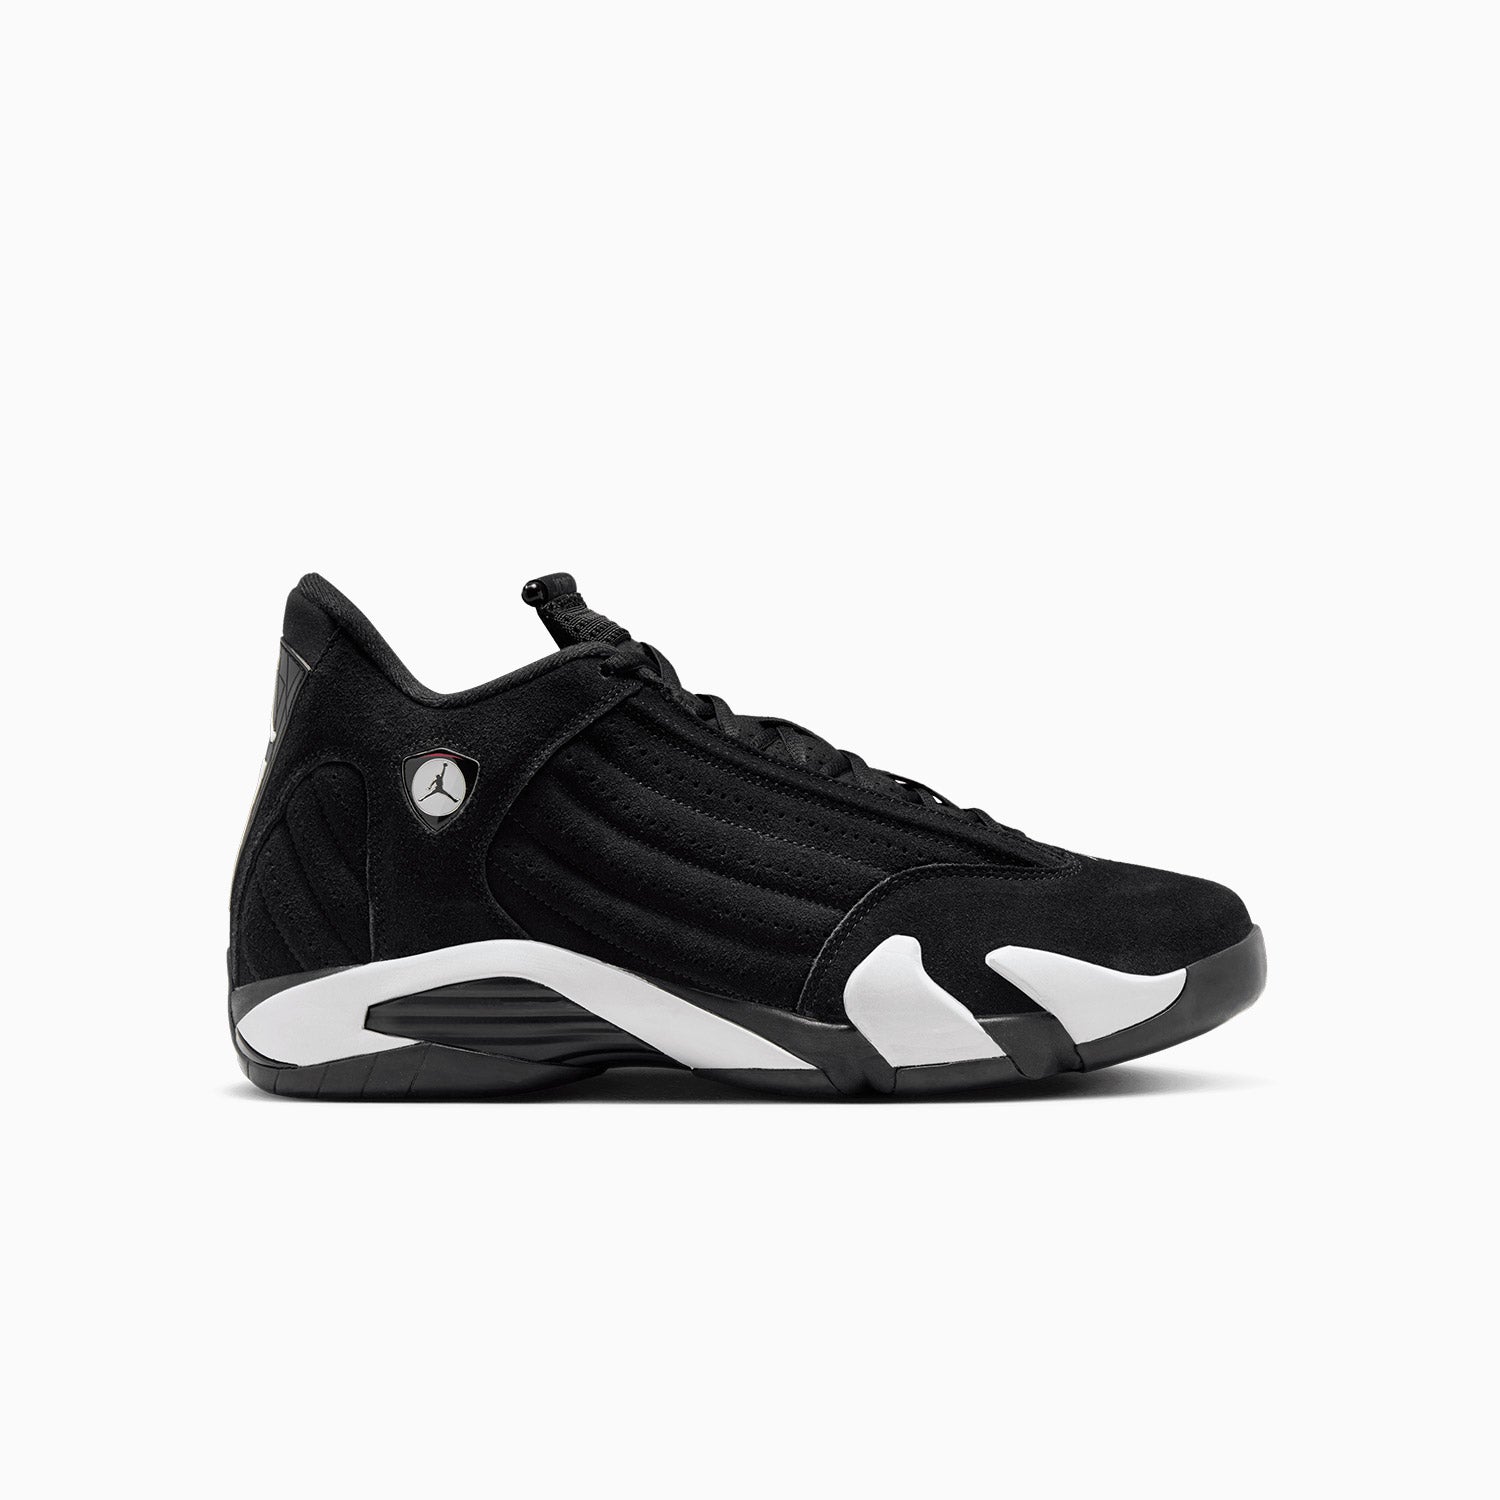 mens-air-jordan-14-retro-black-white-shoes-487471-016